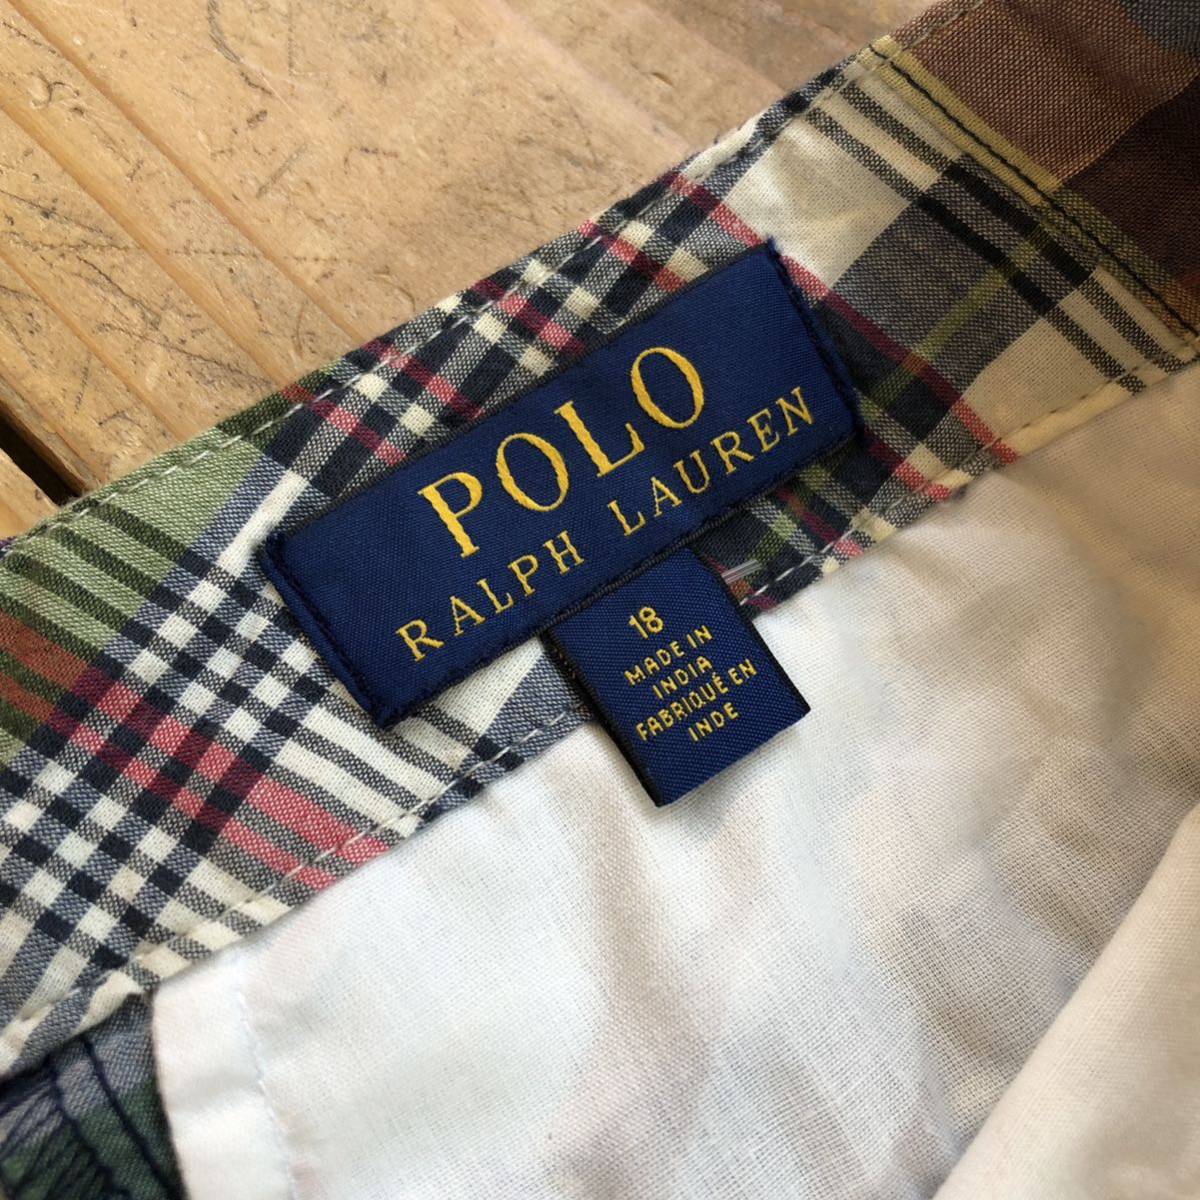 USA б/у одежда POLO RALPH LAUREN Polo Ralph Lauren шорты шорты Kids 18 размер проверка лоскутное шитье America скупка P0871